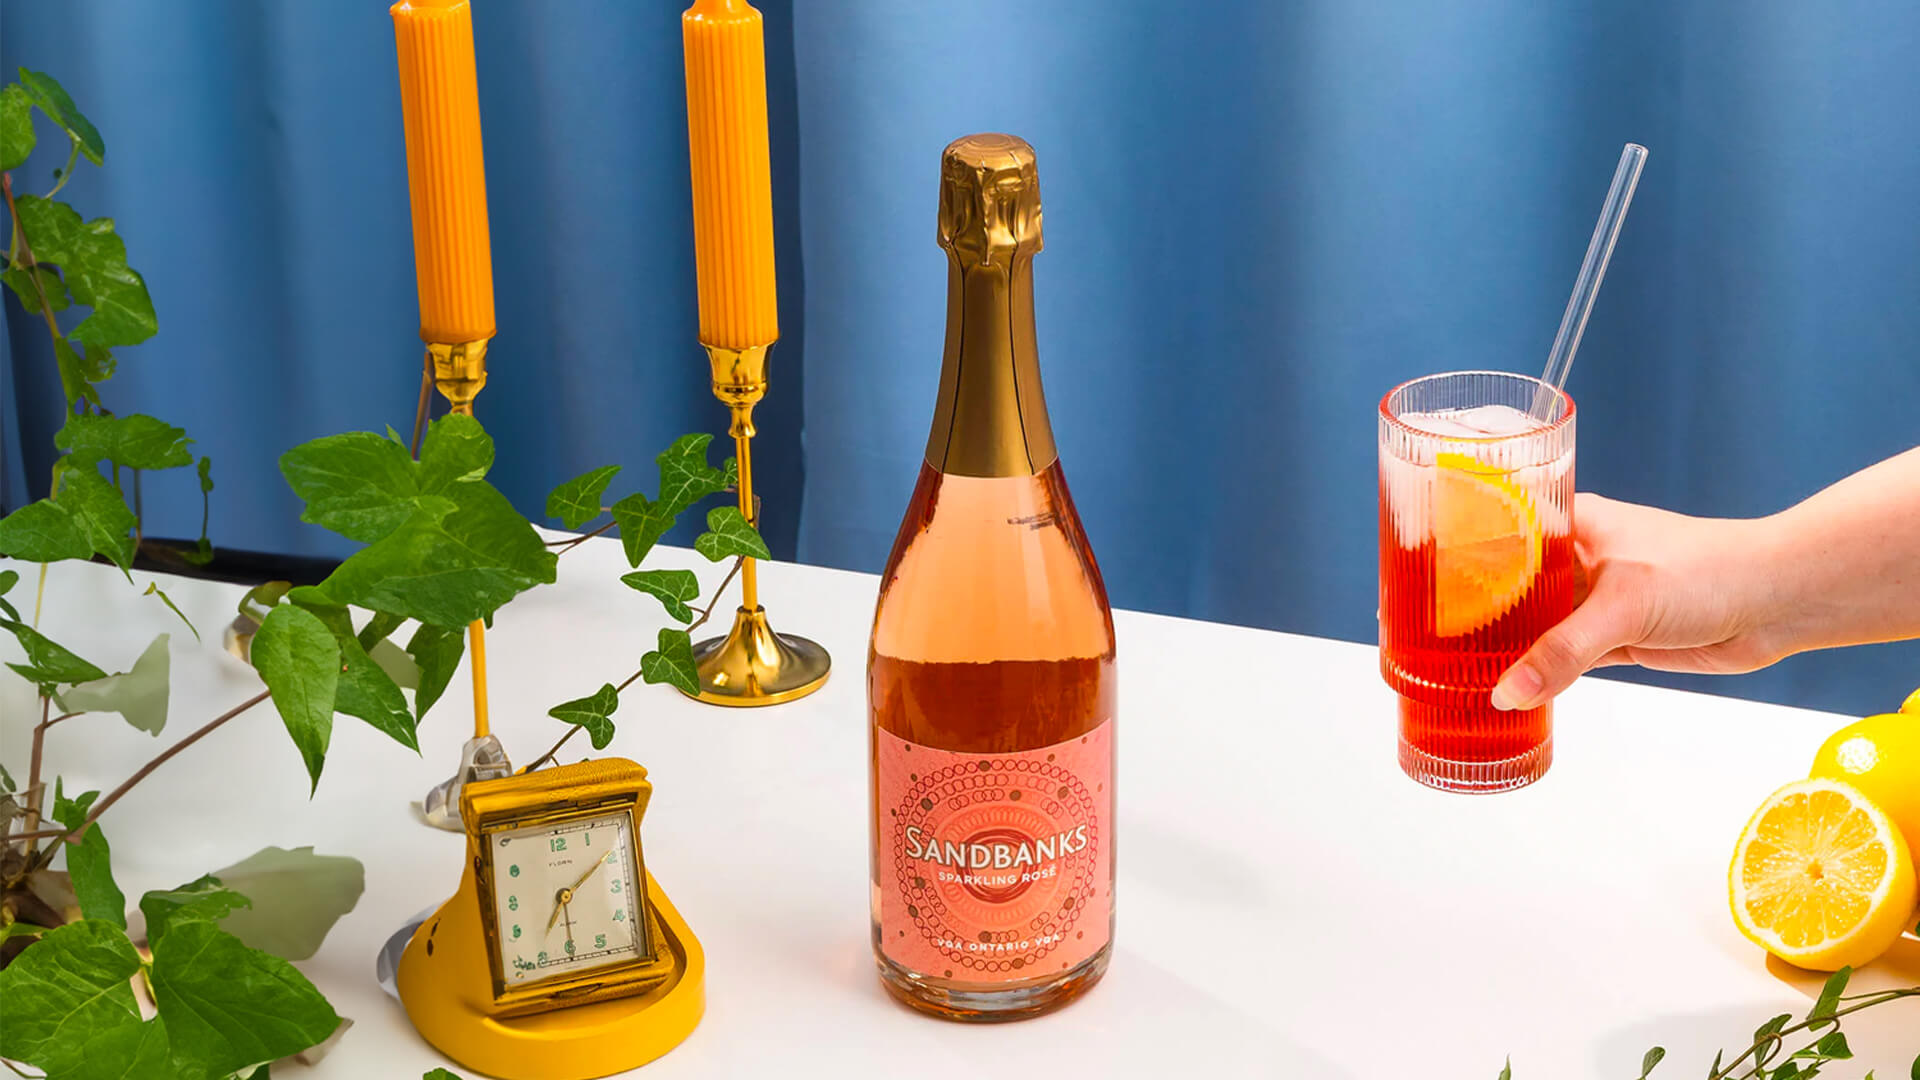 A fun sparkling wine cocktail made with Sandbanks Sparkling Rose.